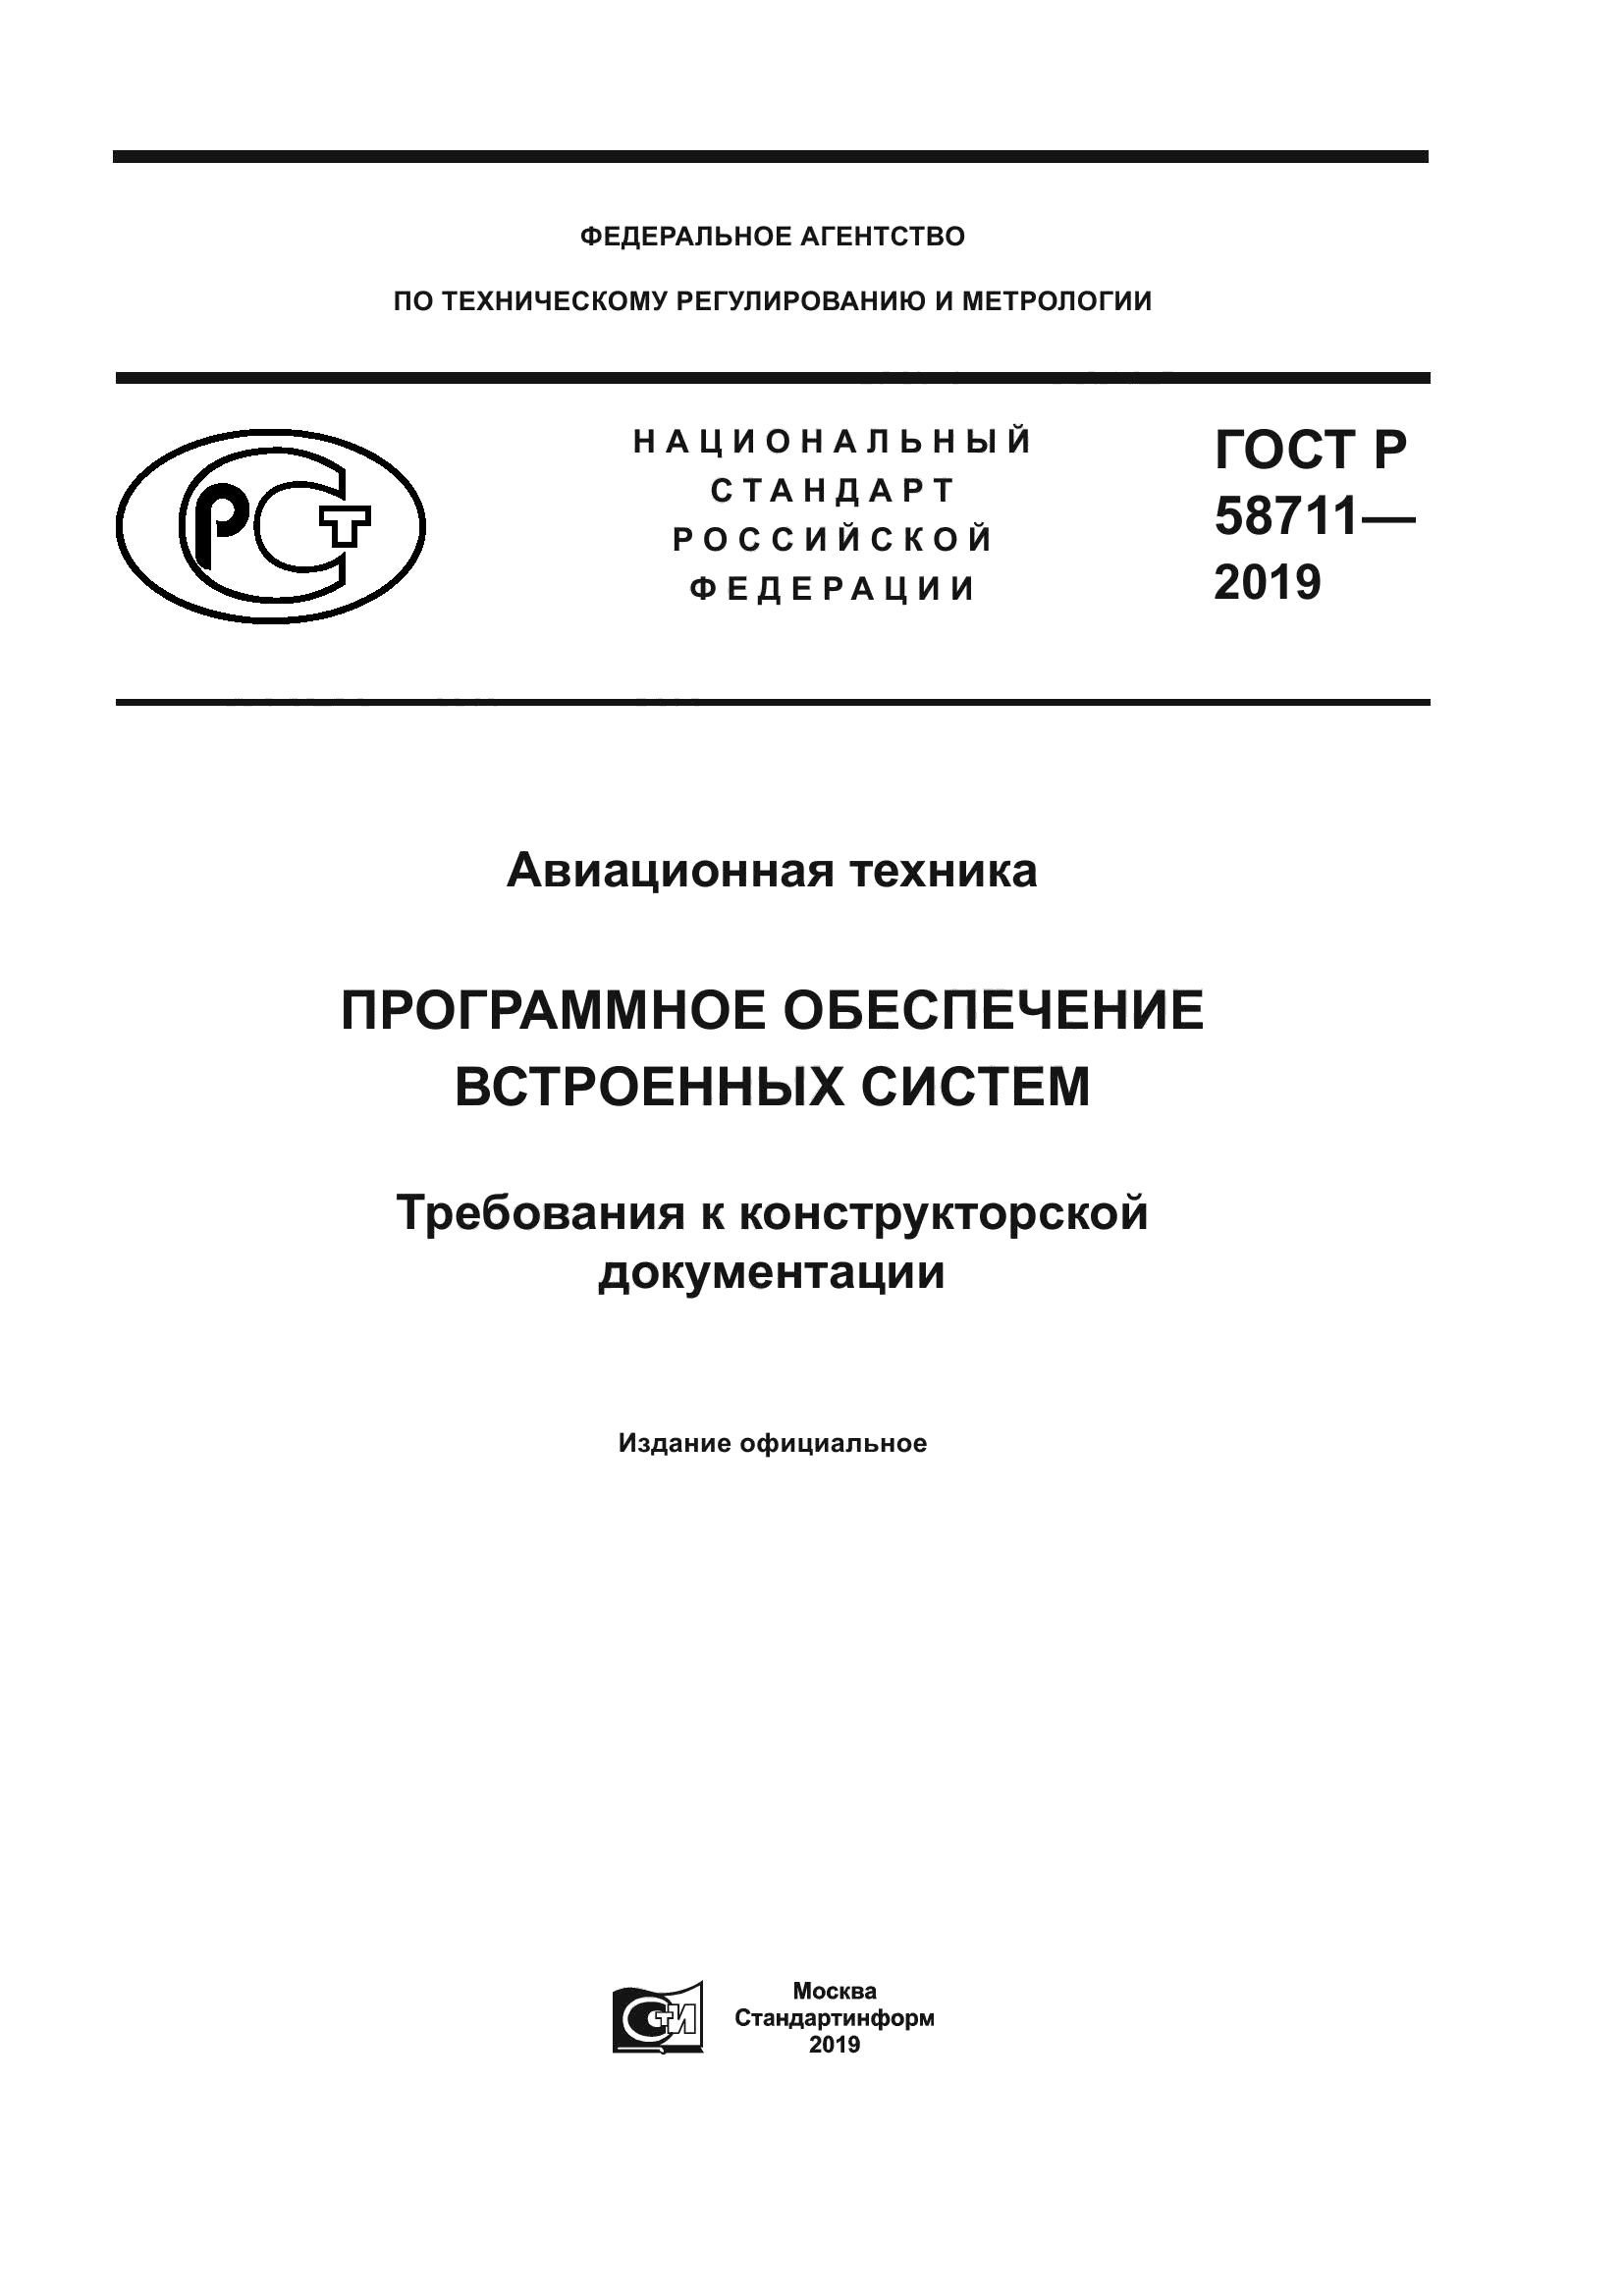 ГОСТ Р 58711-2019